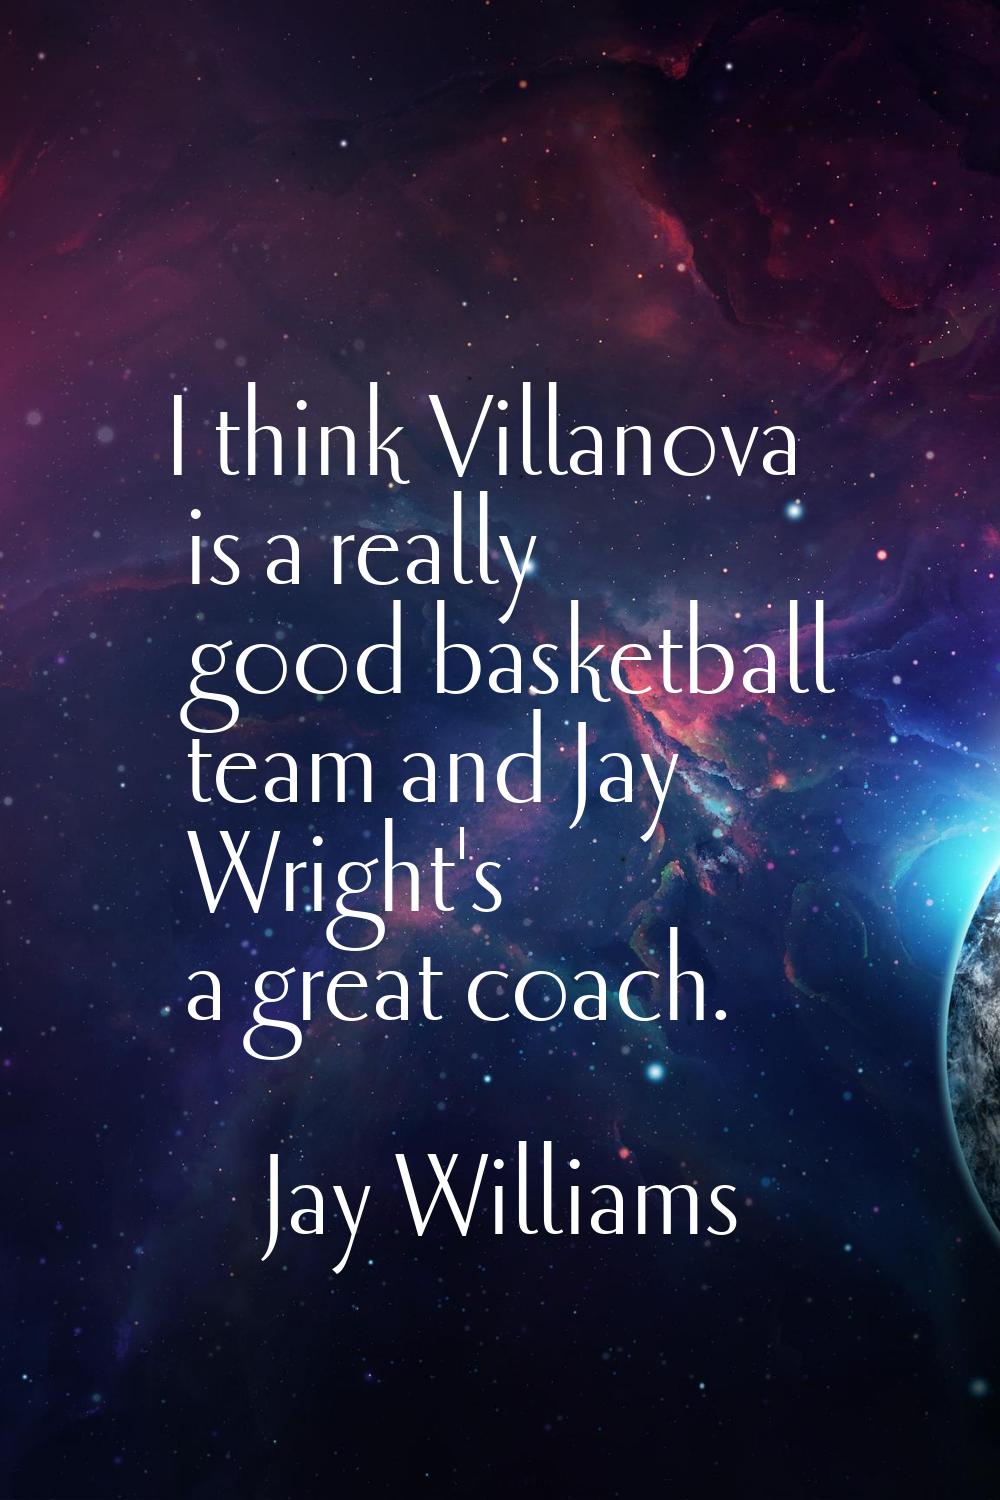 I think Villanova is a really good basketball team and Jay Wright's a great coach.